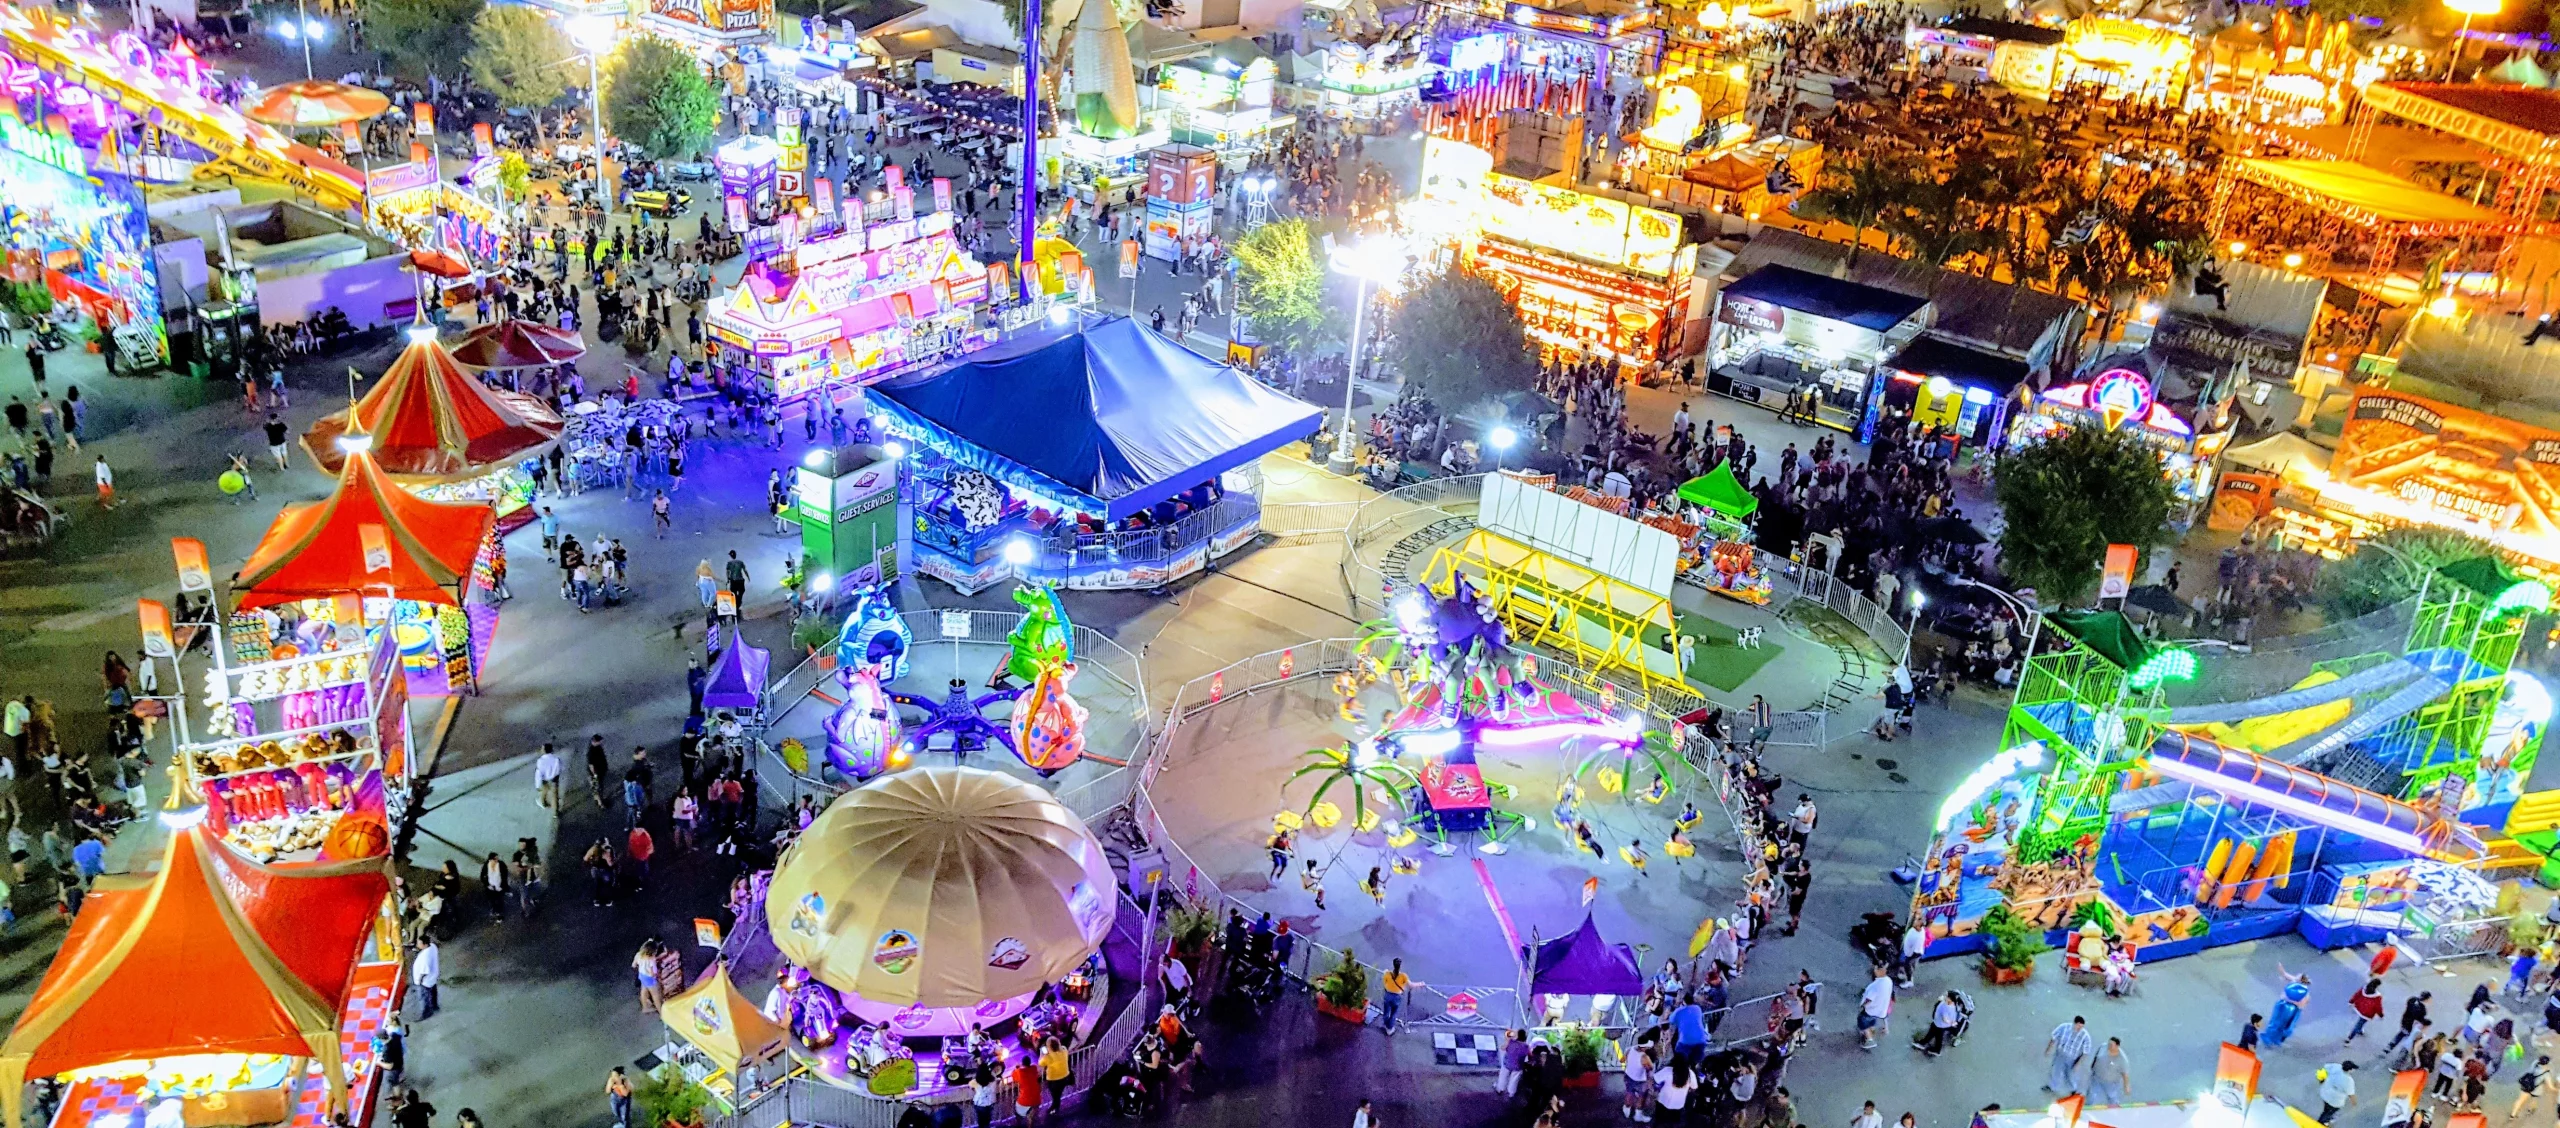 Orange County Fair in Costa Mesa